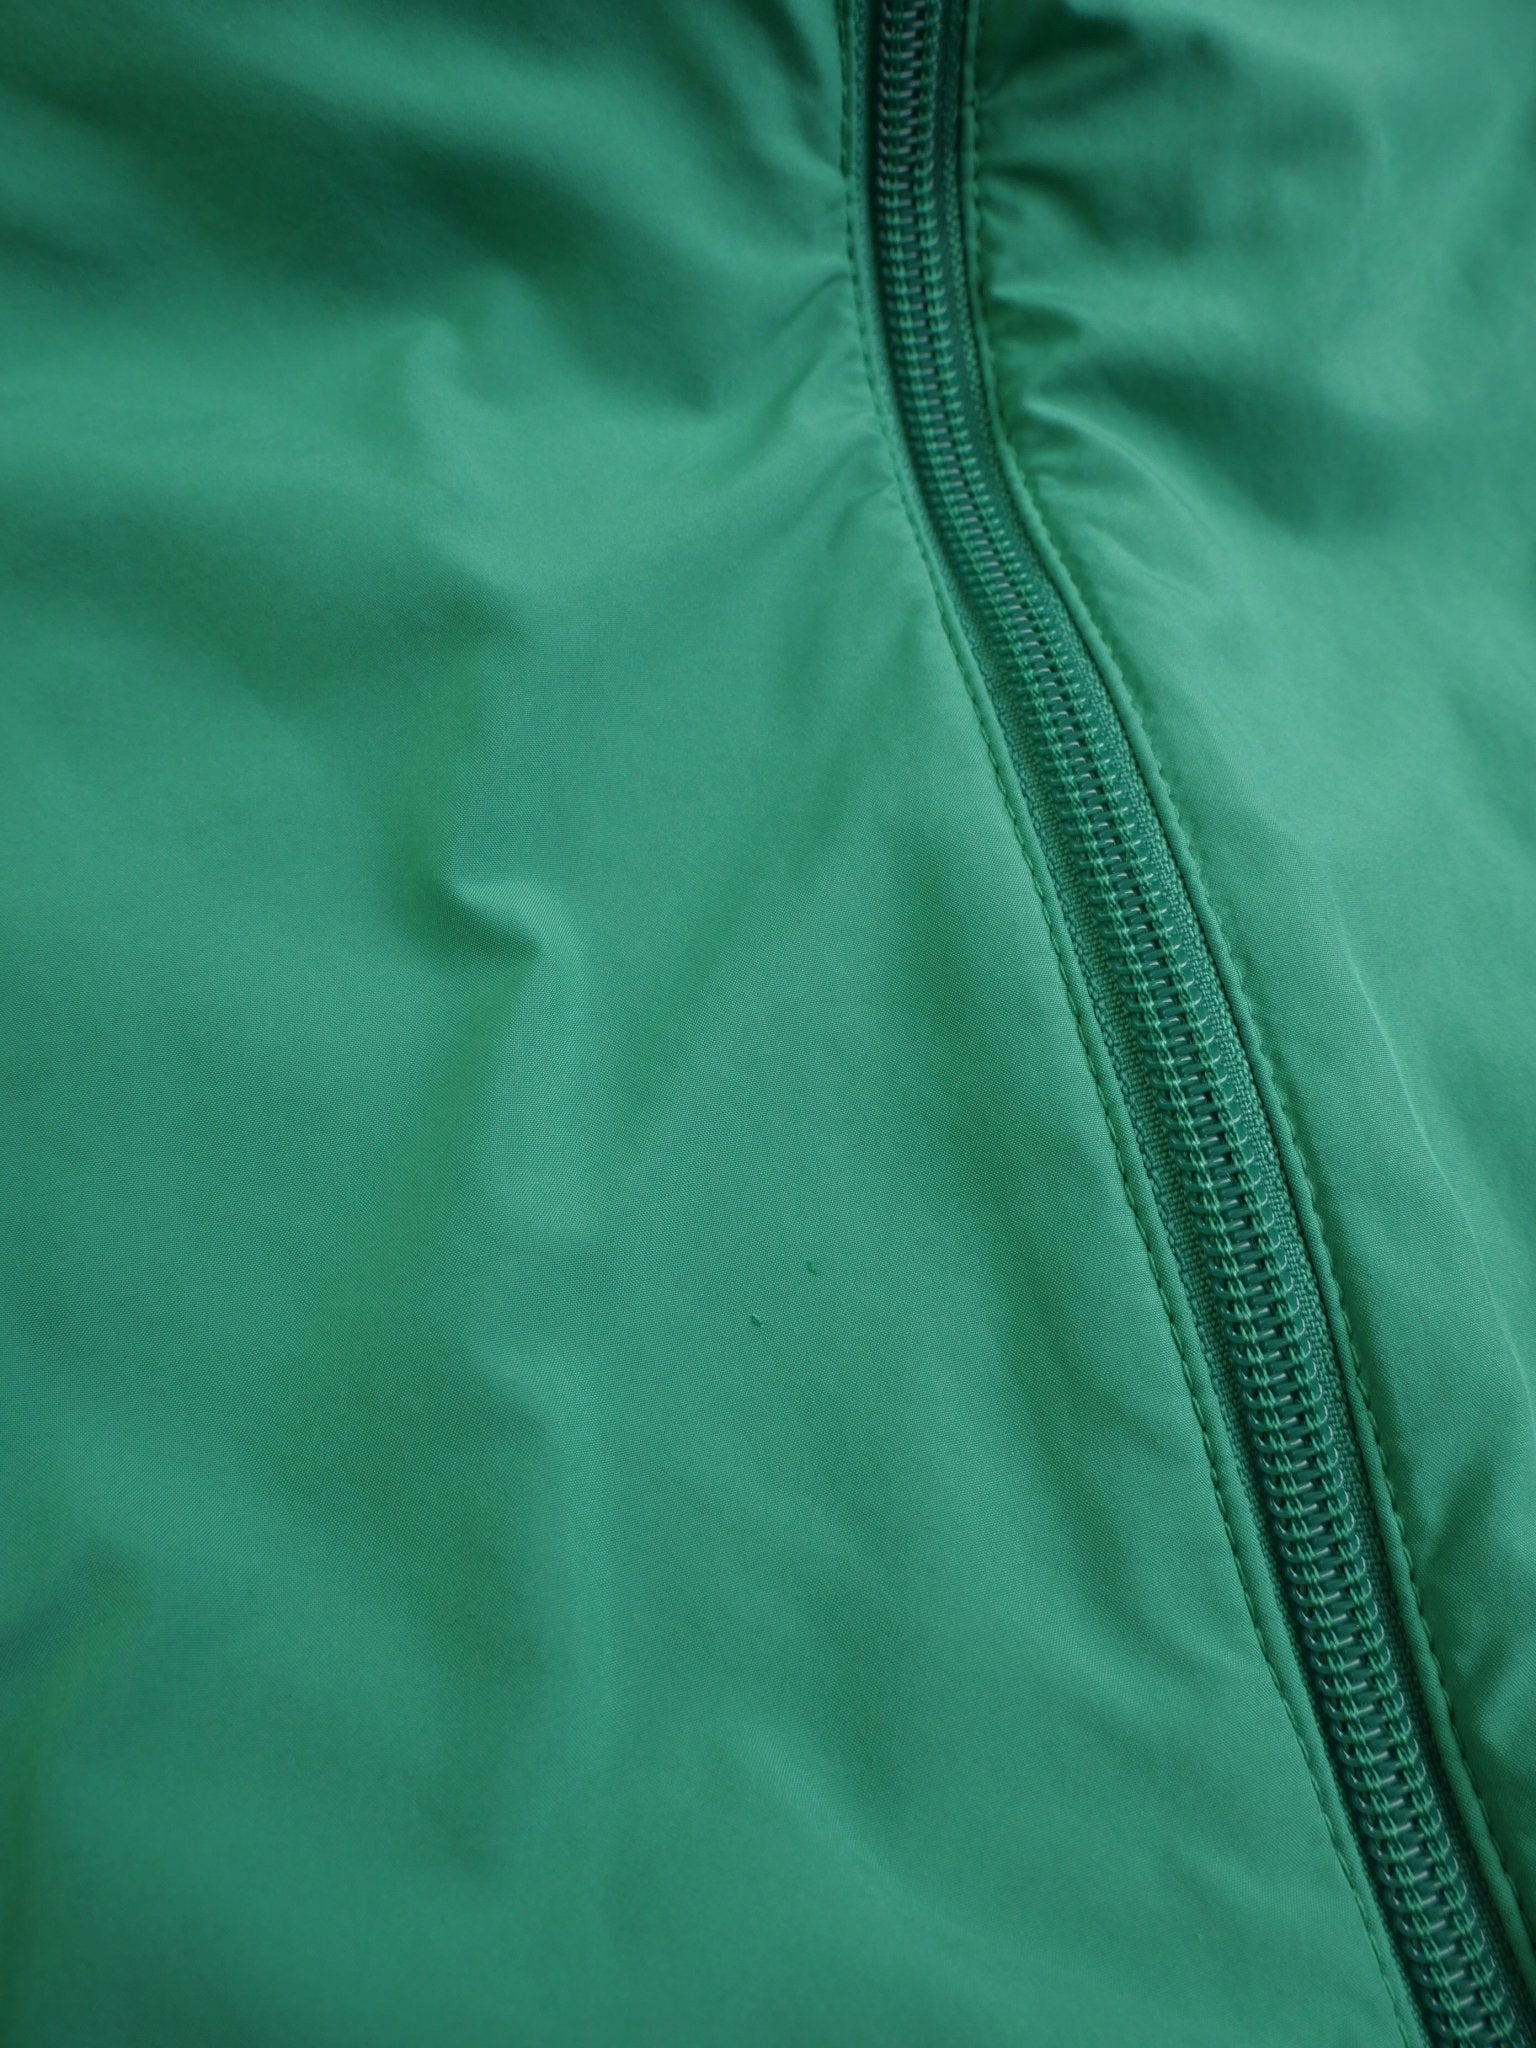 Nike embroidered Logo green thin Jacke - Peeces